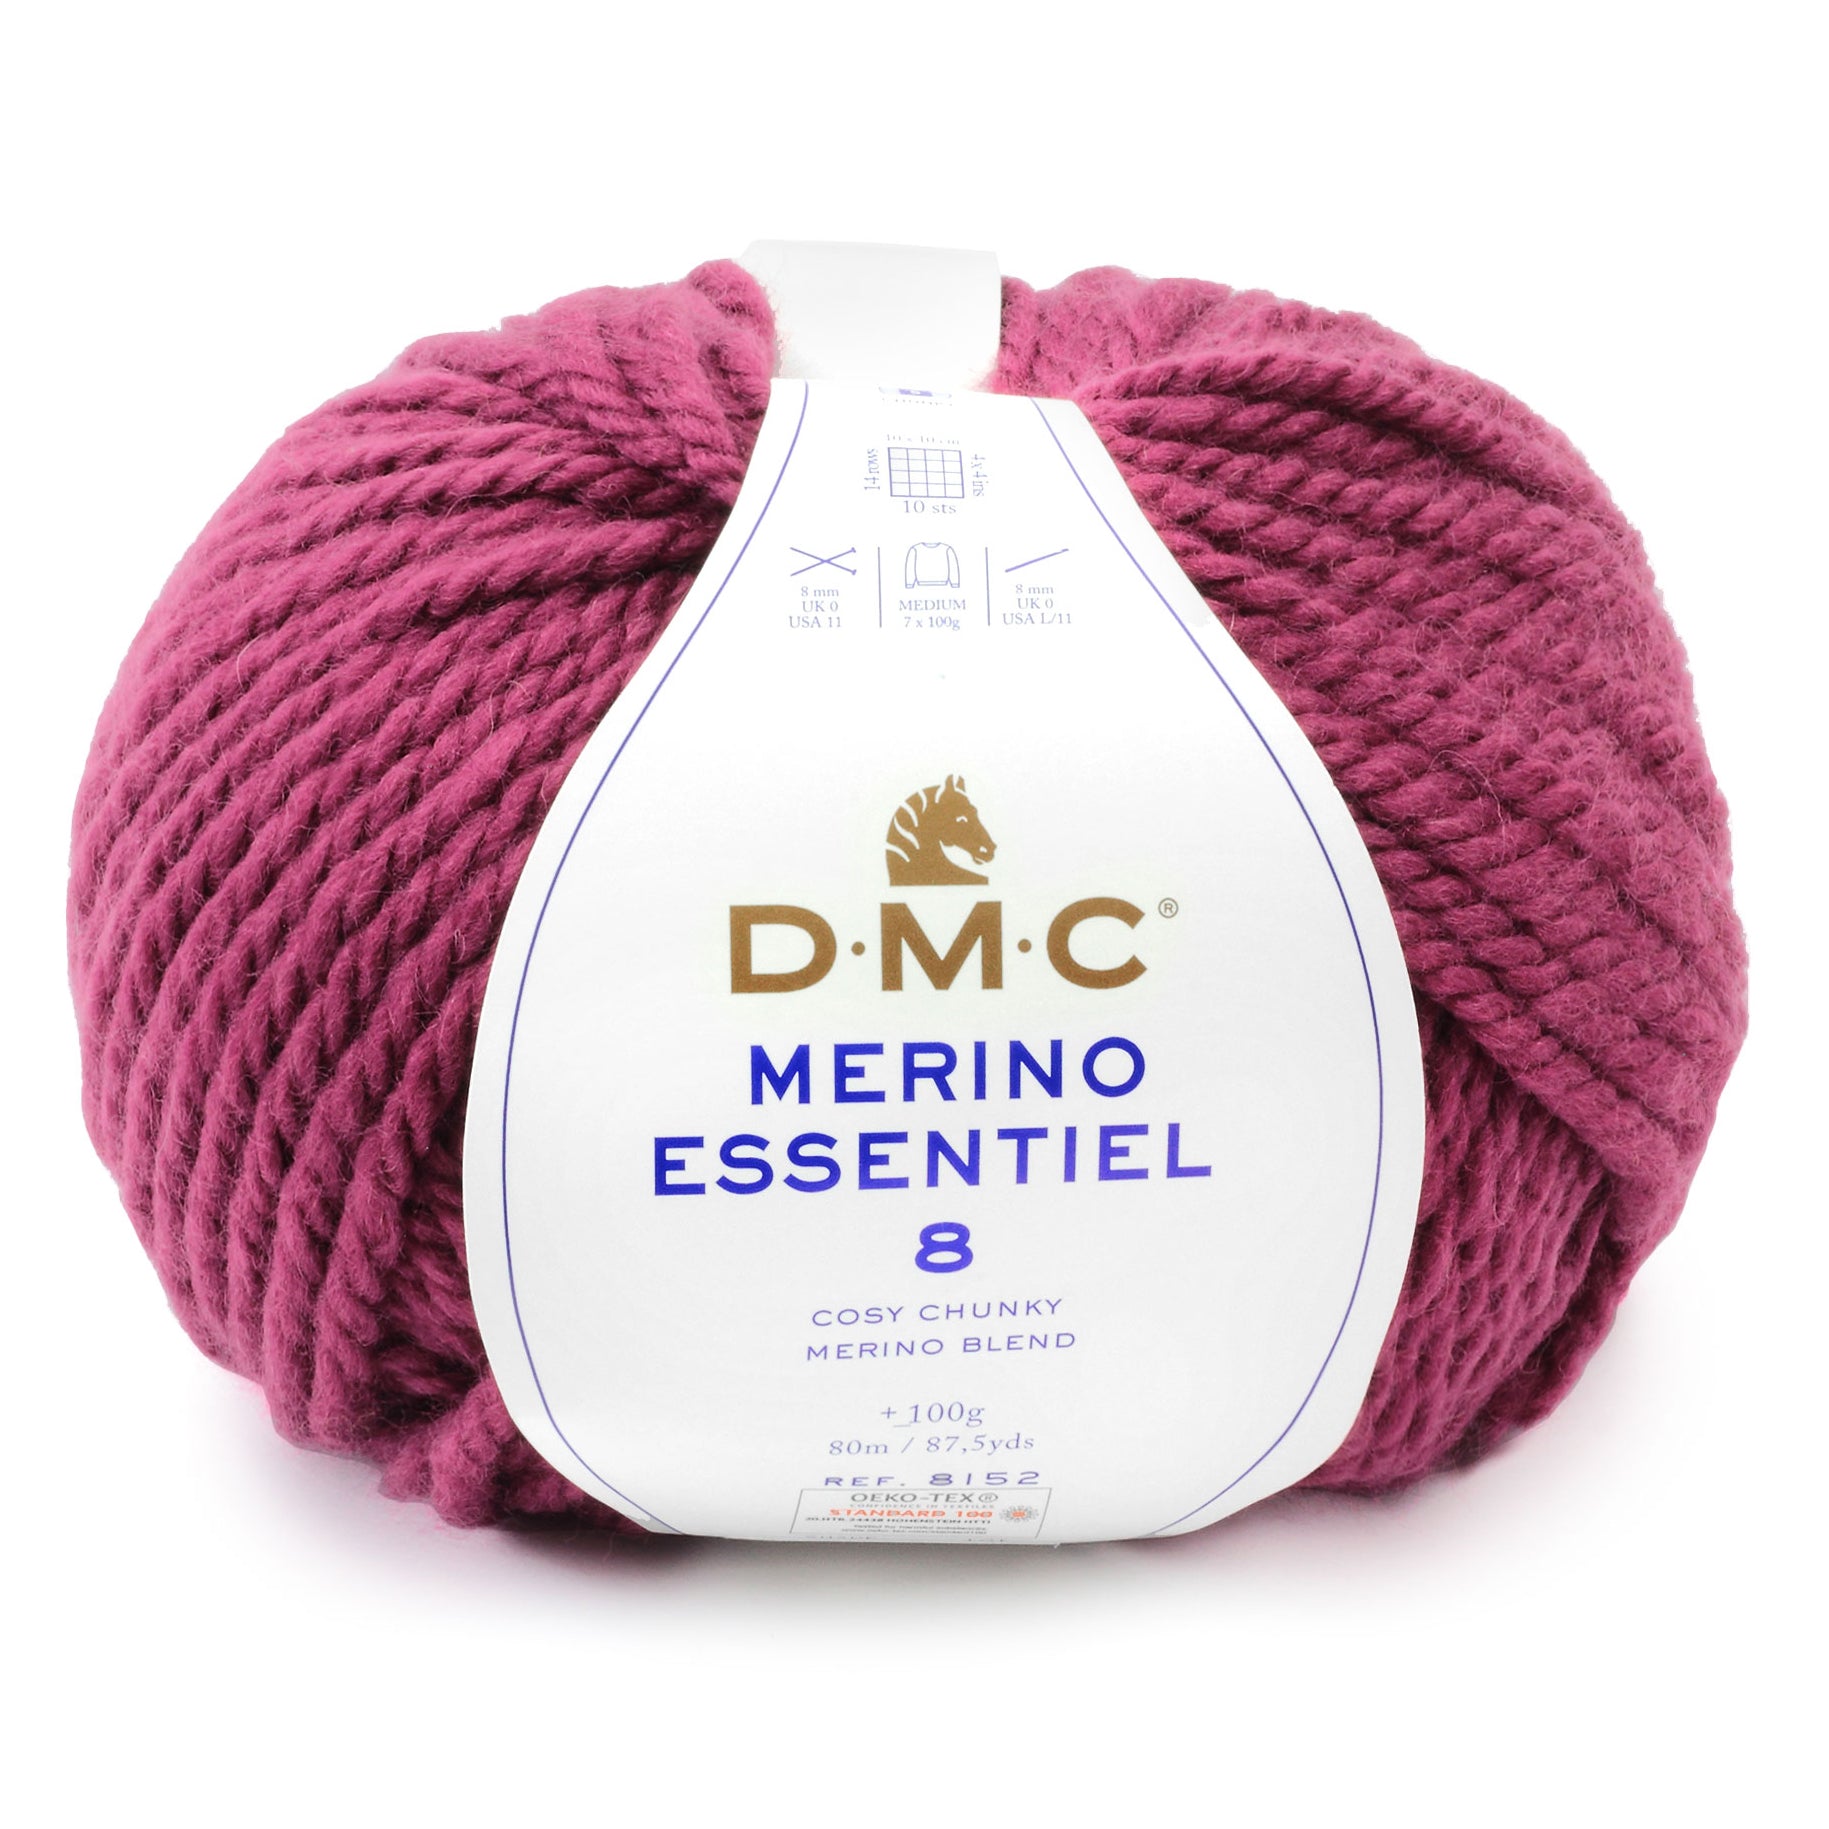 DMC Merino Essentiel 8 - Quality Blend for Tricot